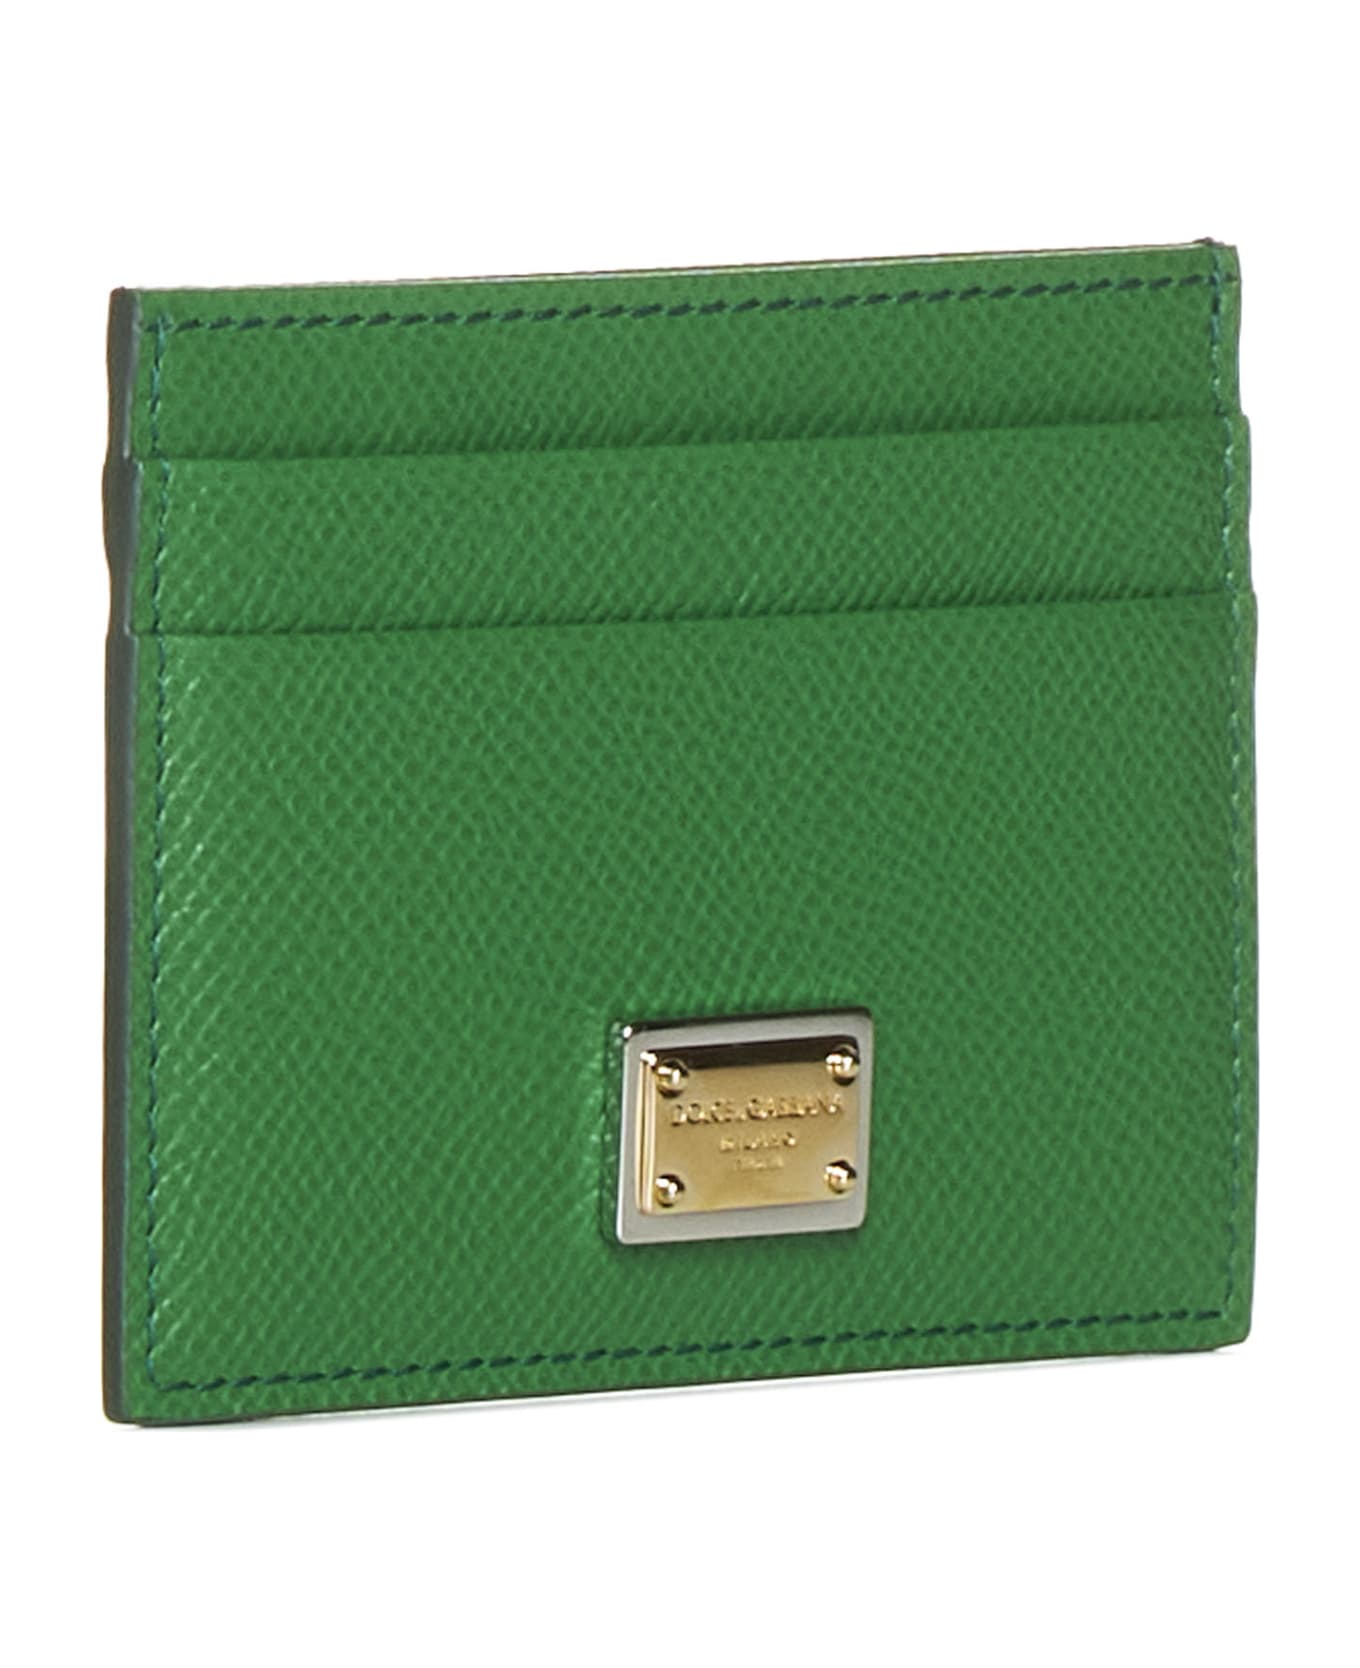 Dolce & Gabbana Wallet - Verde 財布